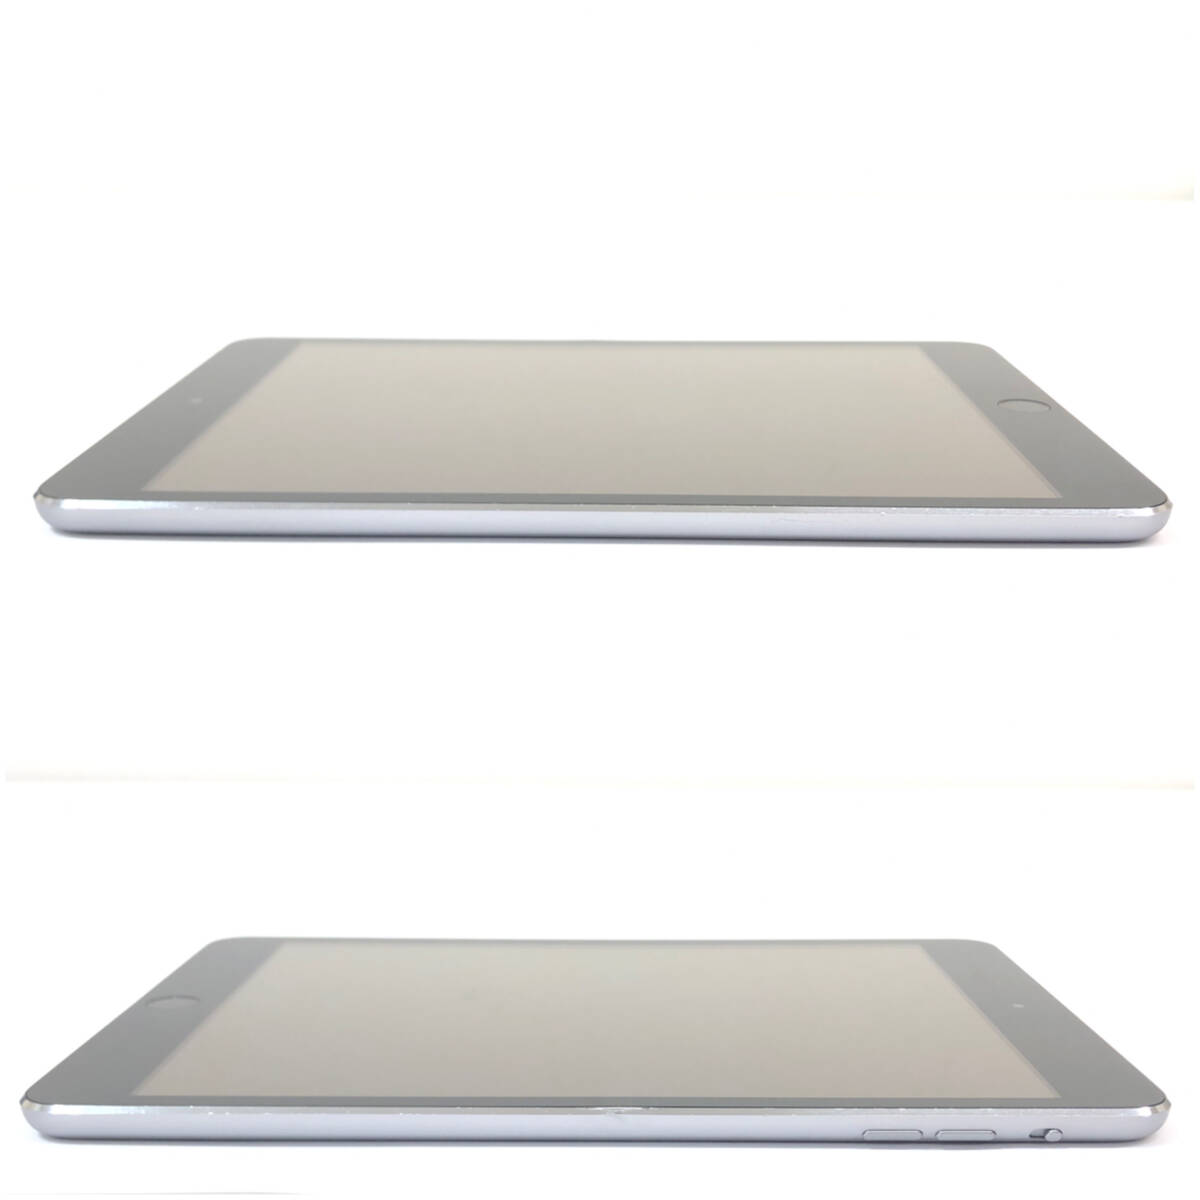 1円〜 iPad mini3 Wi-Fiモデル 16GB MGNR2J/A 9.7インチ A1599 Apple 第3世代